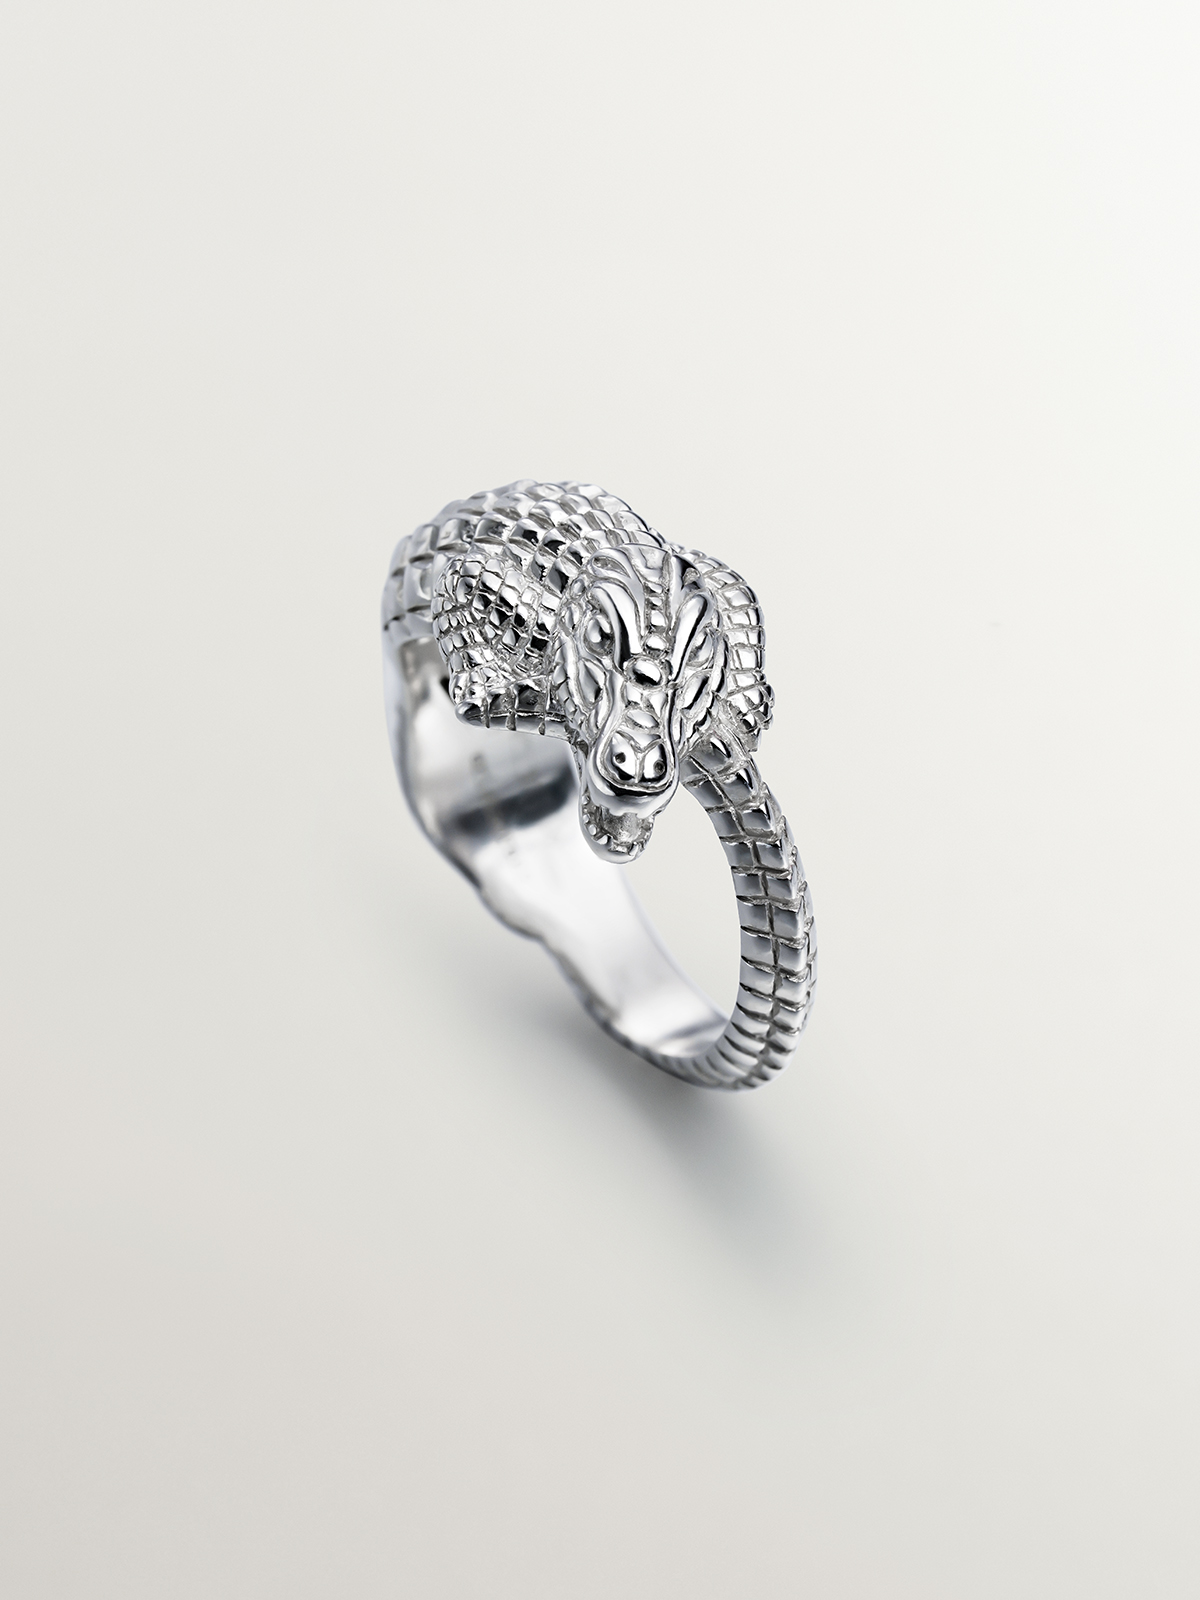 925 silver ring shaped like crocodile